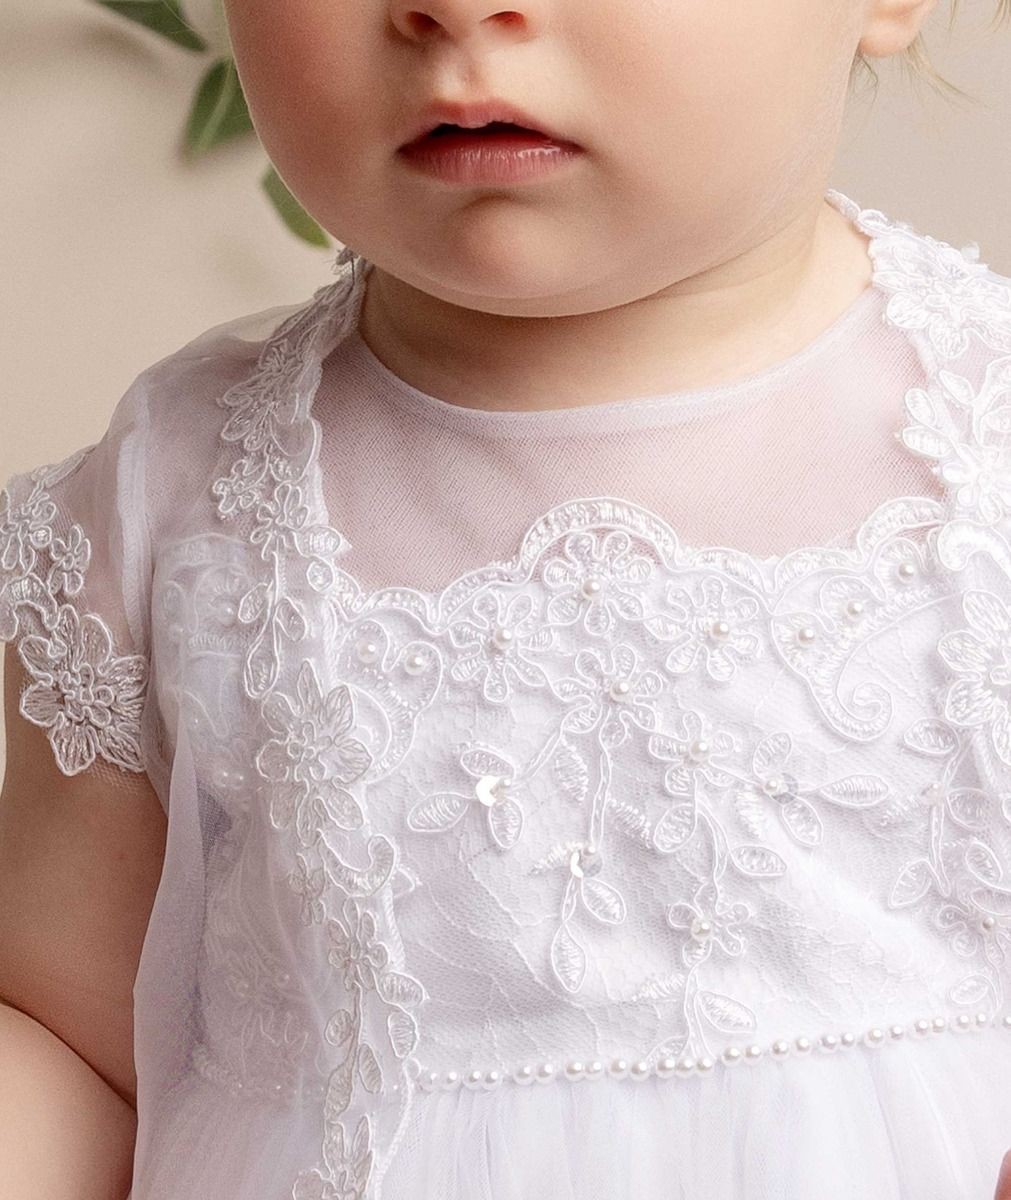 Baby Girls White Lace Christening Dress Set - MELODY